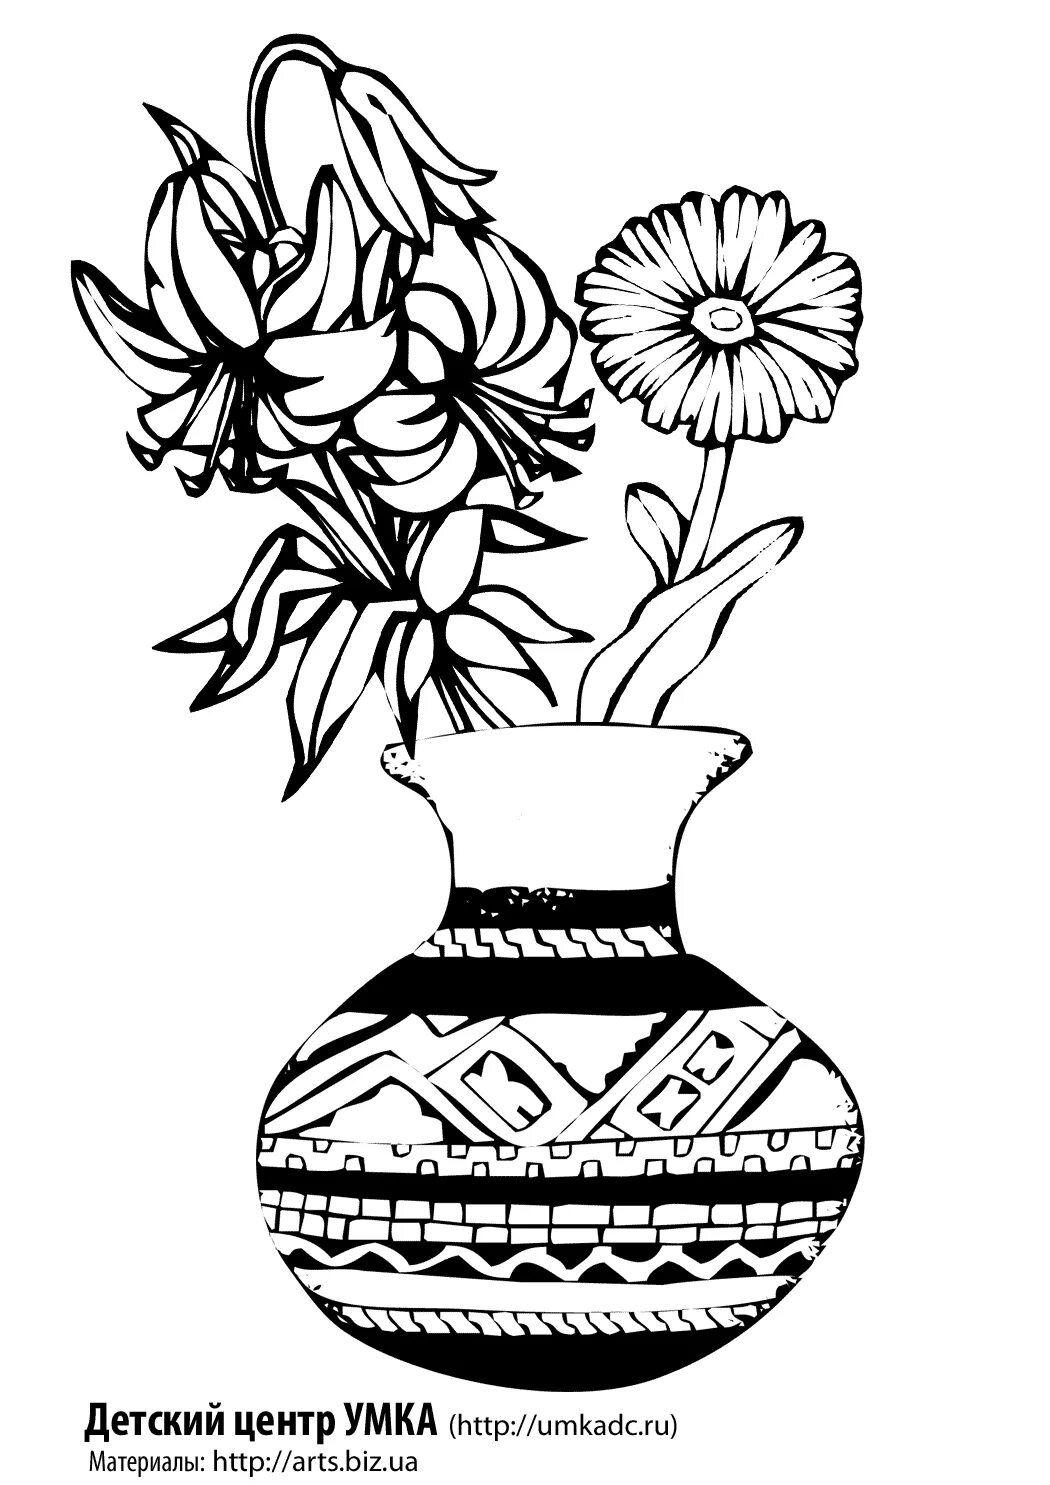 Вазы нарисовать картинки. Рисунок вазы. Рисунок вазы с узорами. Ваза с цветами рисунок. Ваза с рисунком.